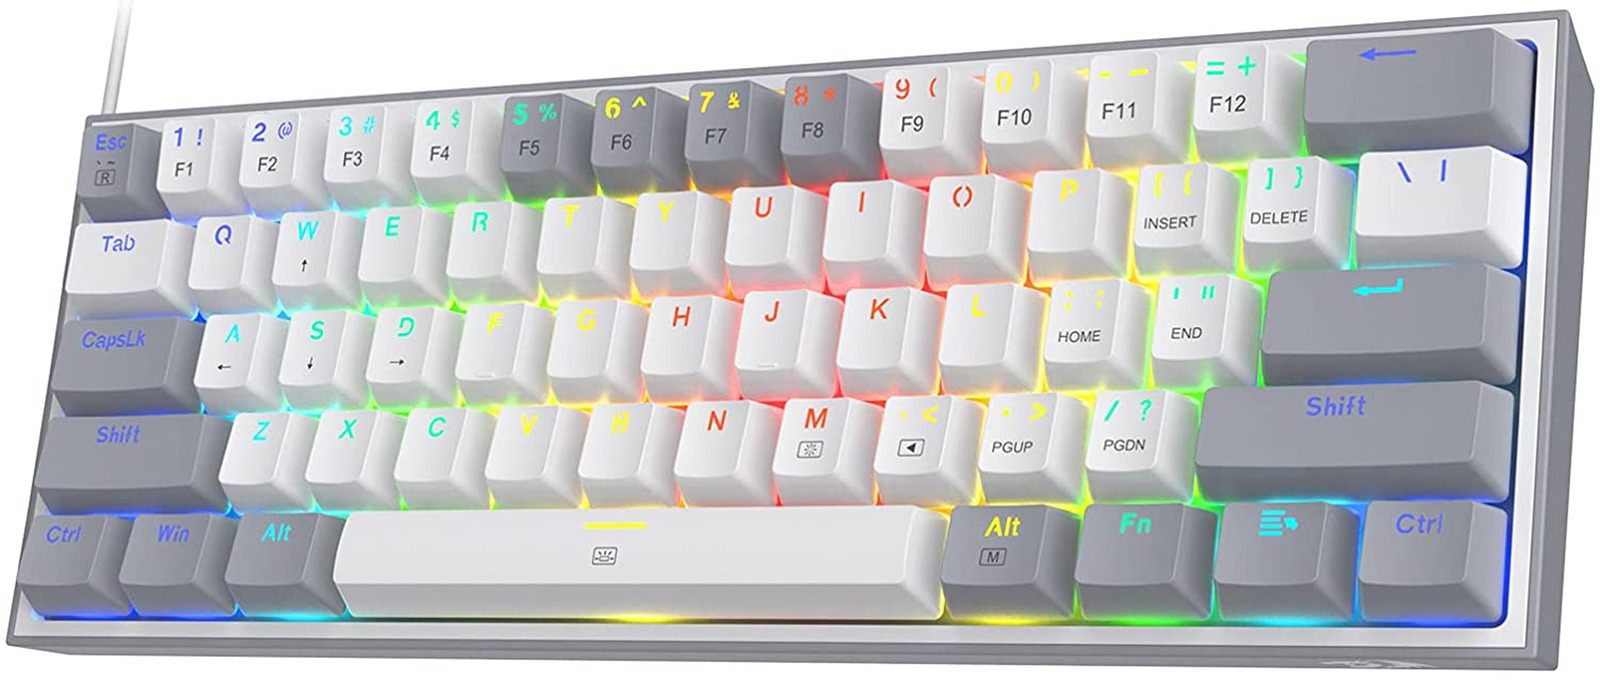 K617 Fizz 60% Wired RGB Gaming Keyboard, 61 Keys Hot-Swap Compact Mechanical Key